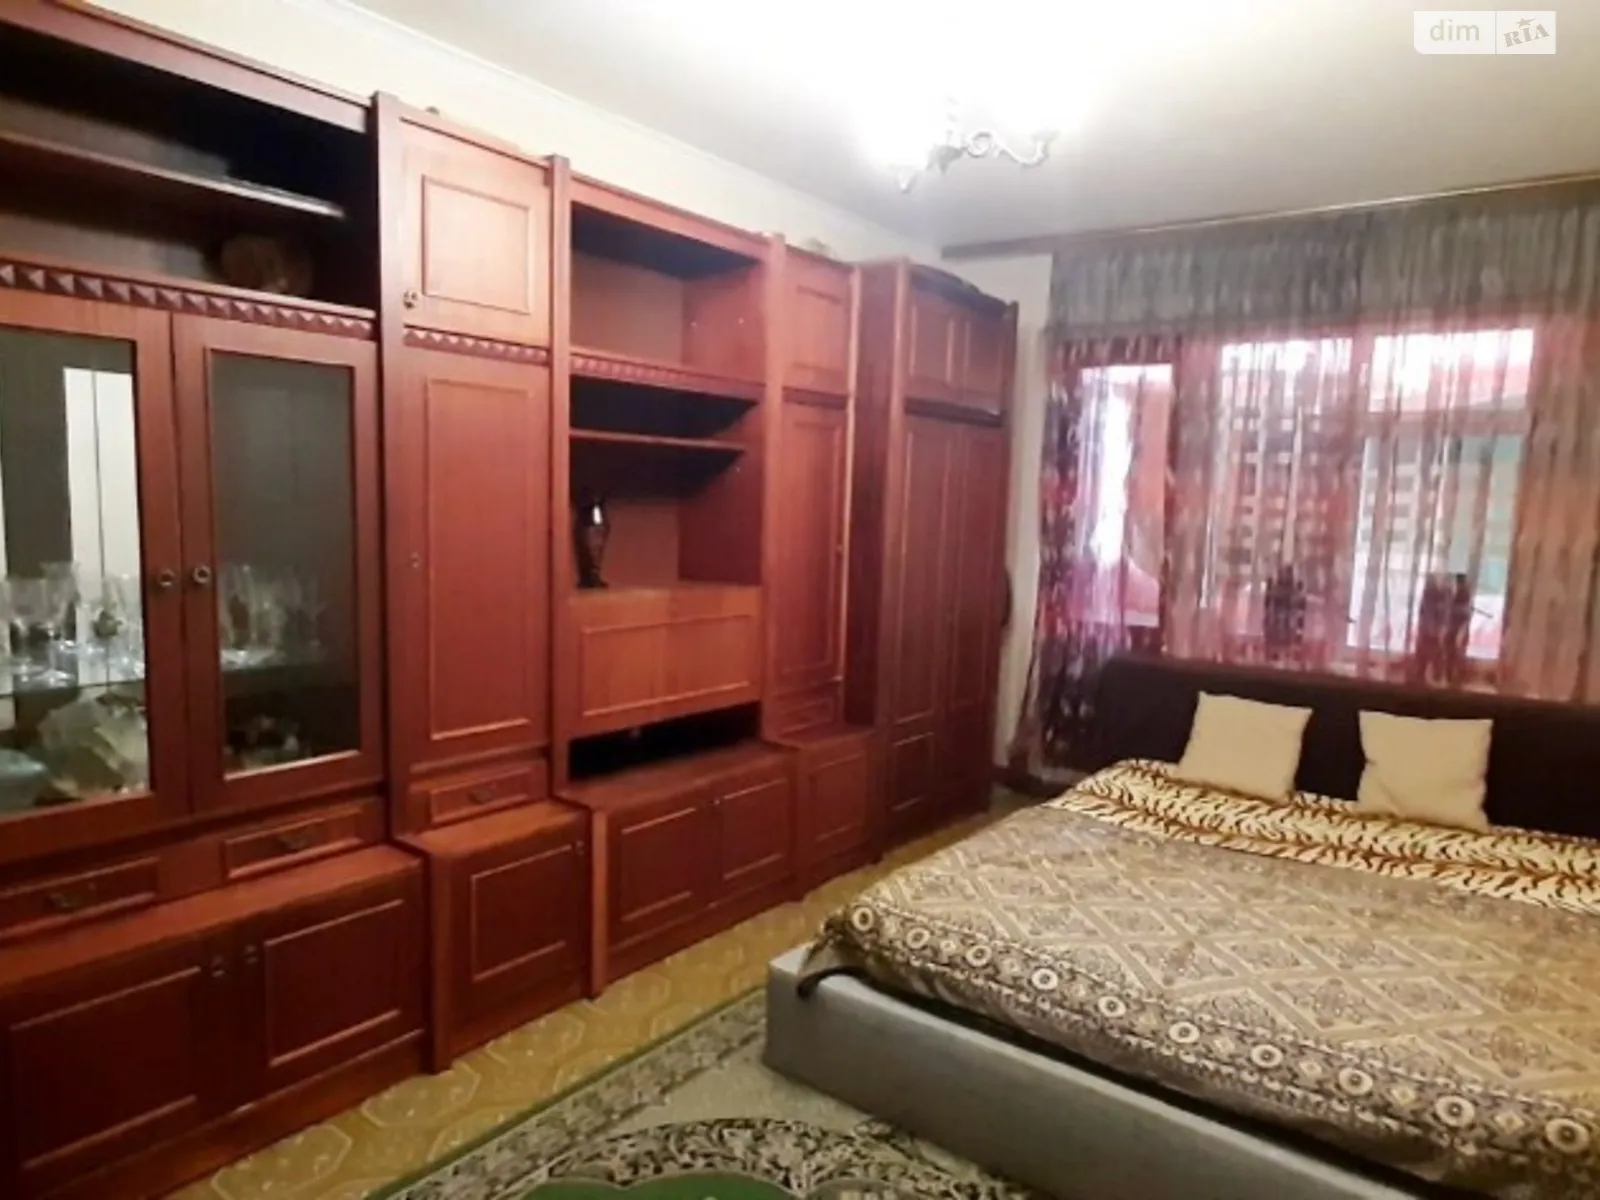 Сдается в аренду 1-комнатная квартира 35 кв. м в Одессе, ул. Академика Вильямса - фото 1